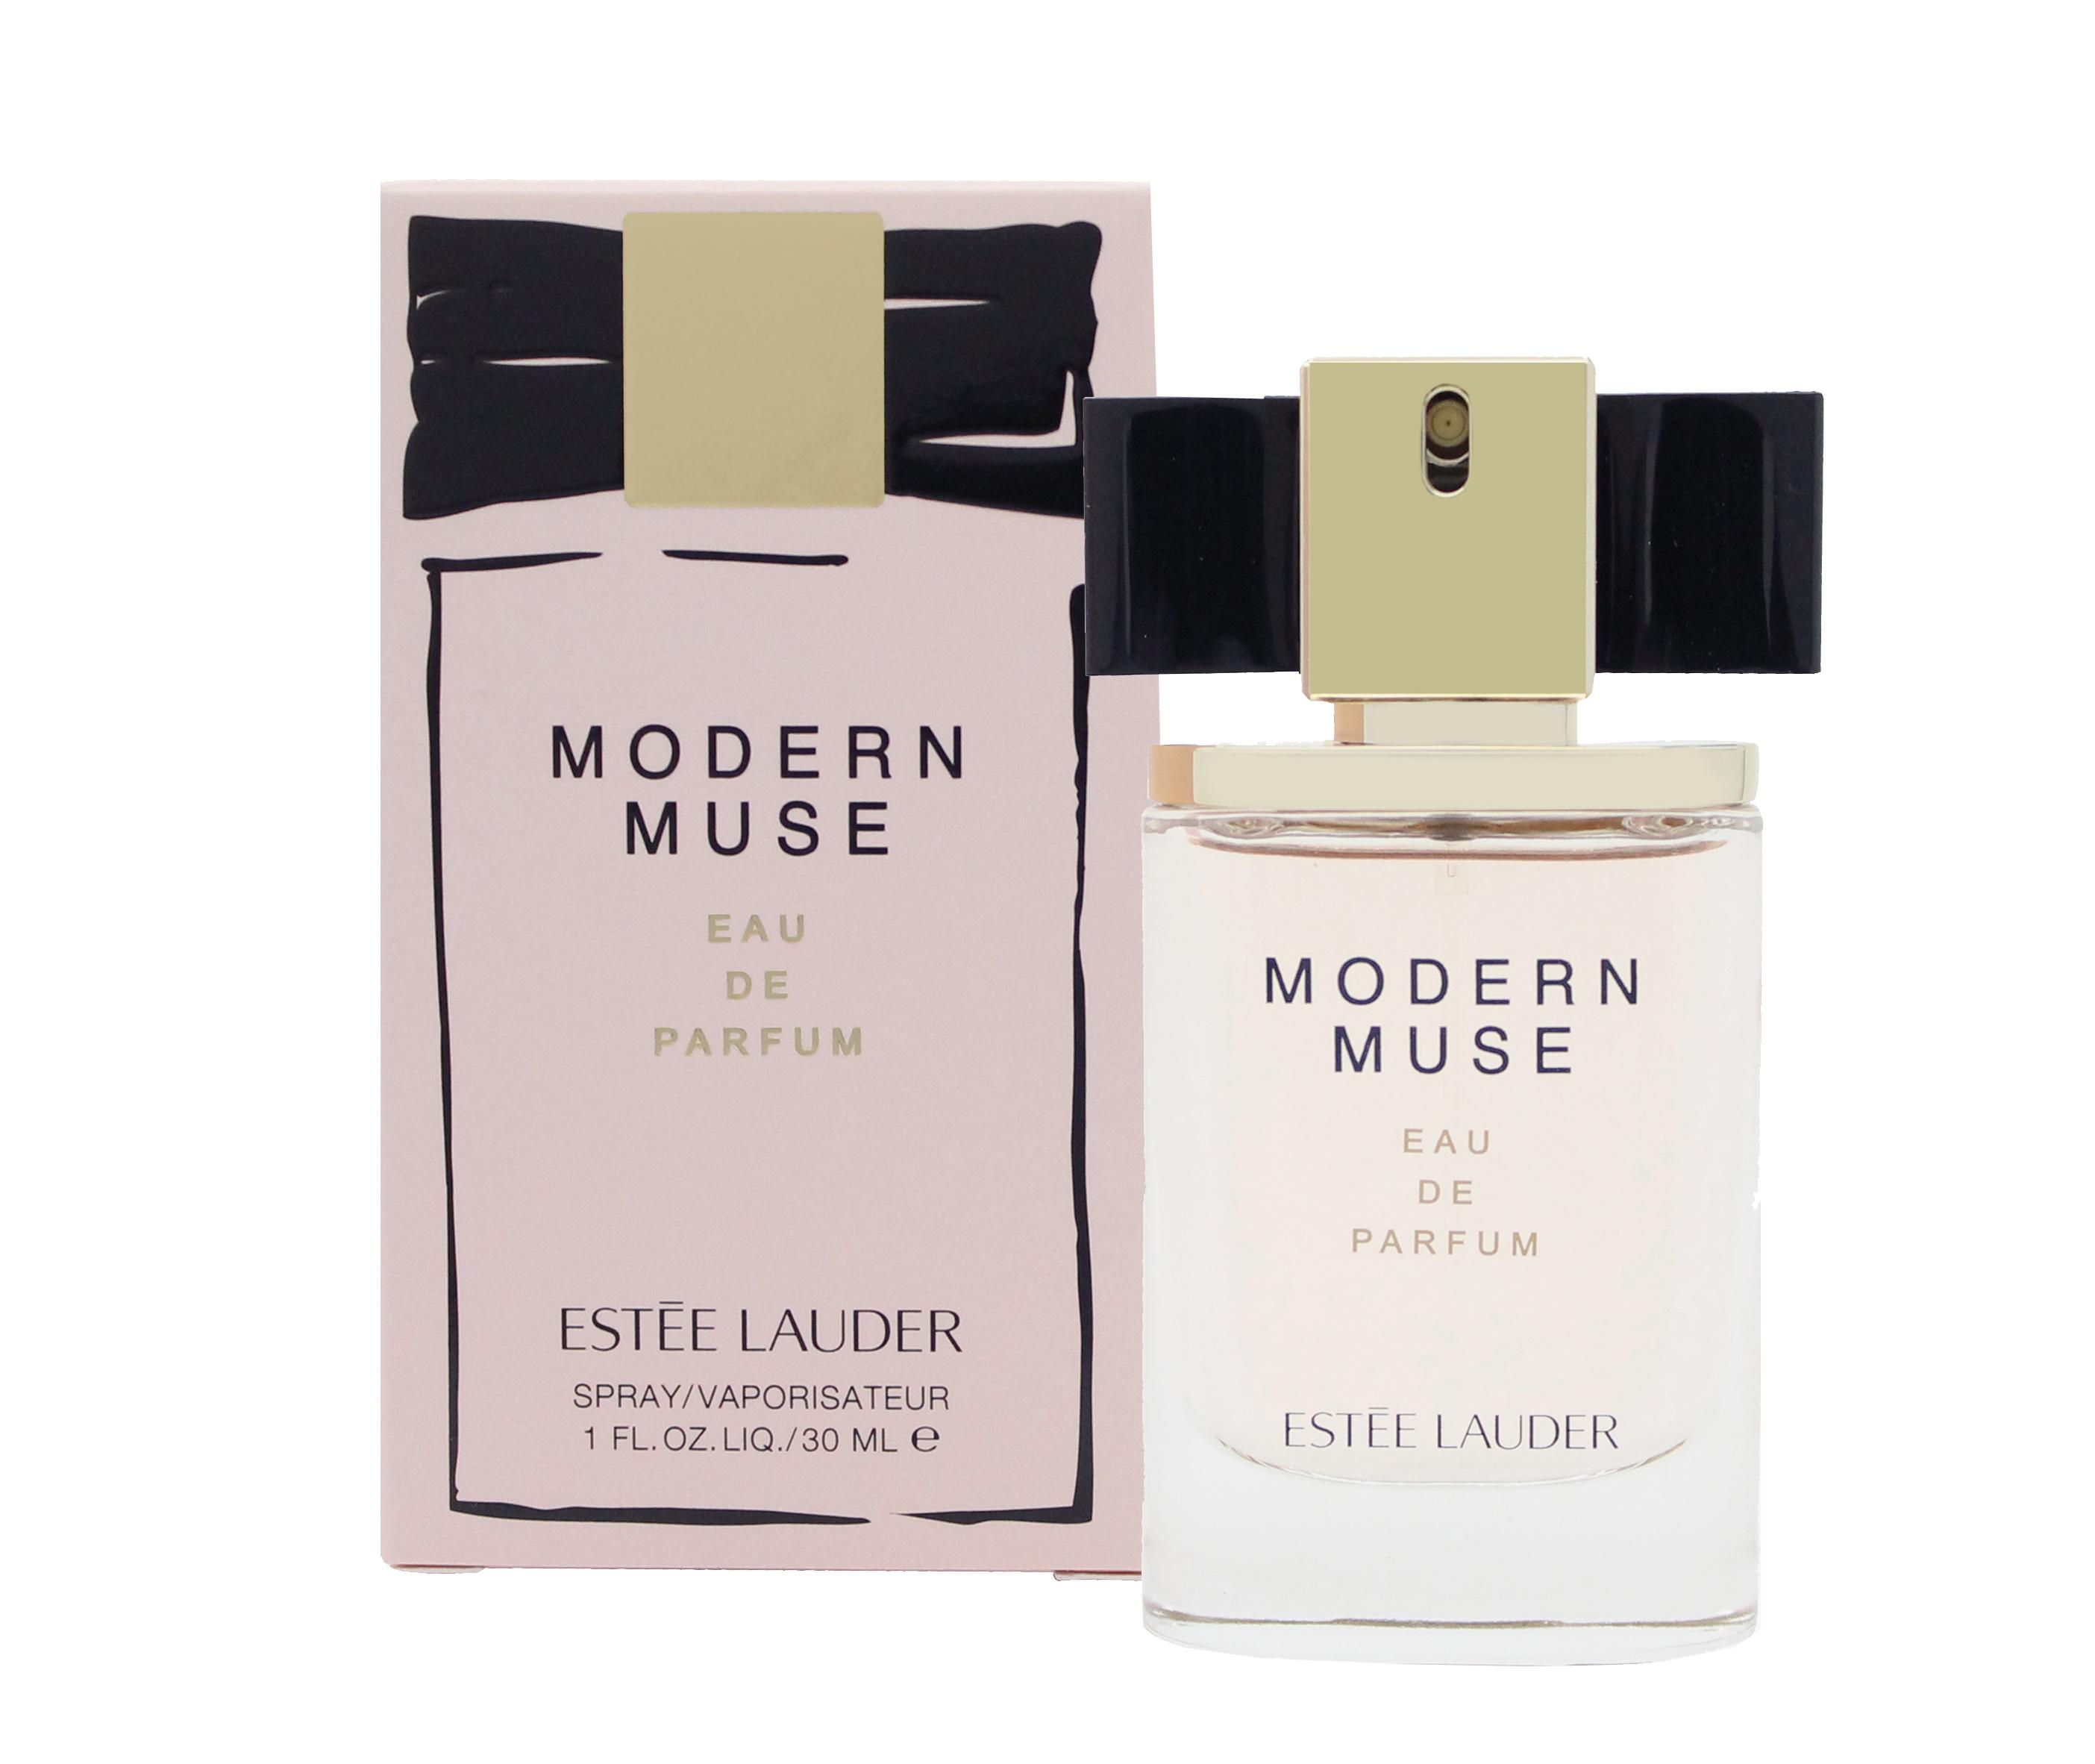 Estee Lauder Modern Muse Eau de Parfum 30ml Spray